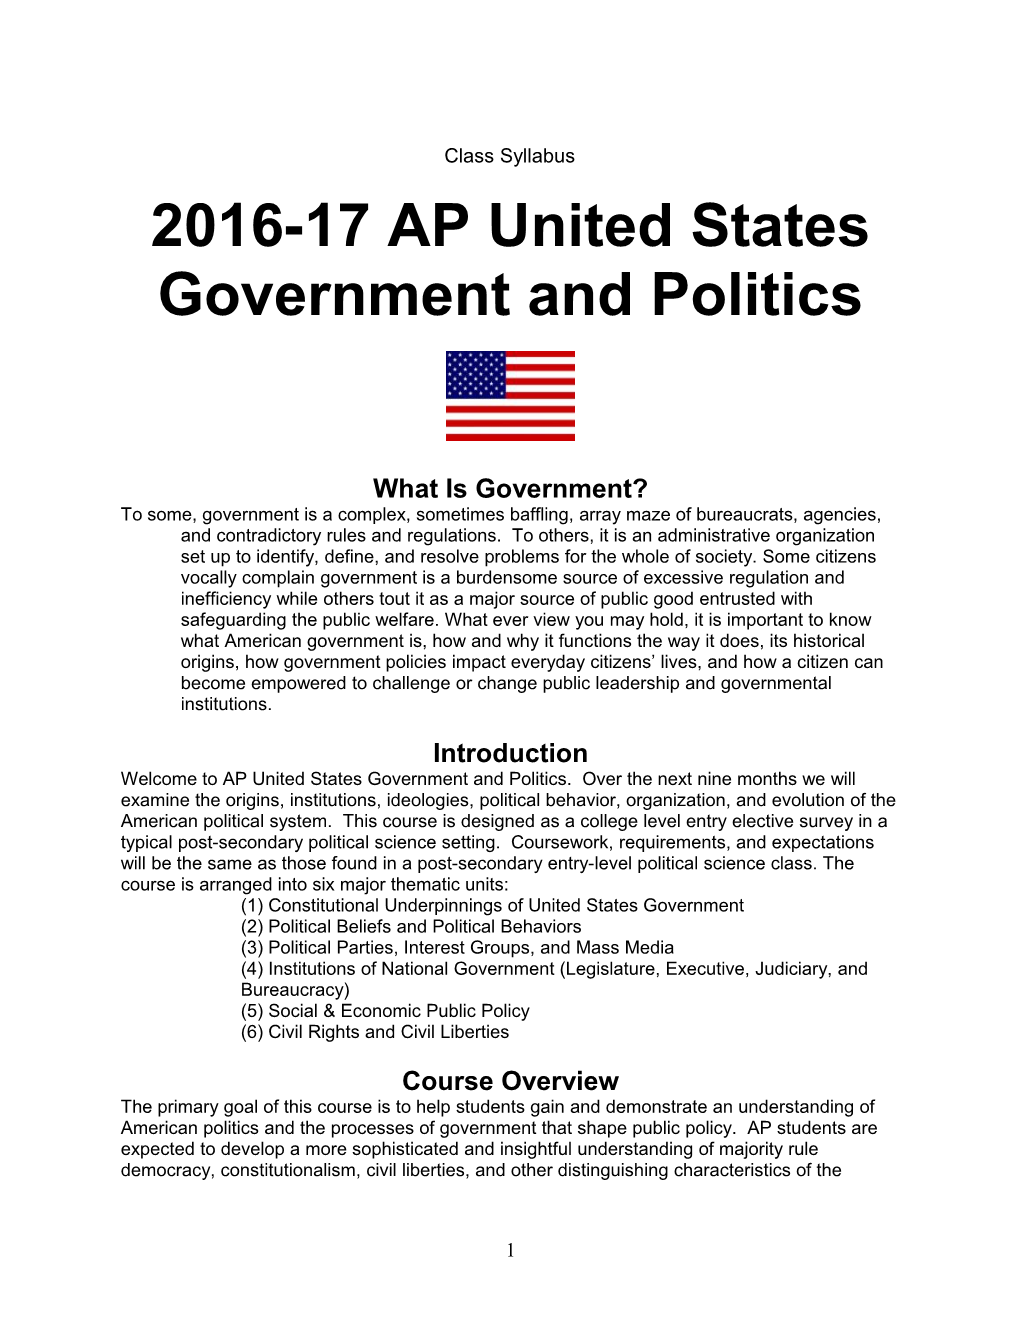 2016-17AP United States